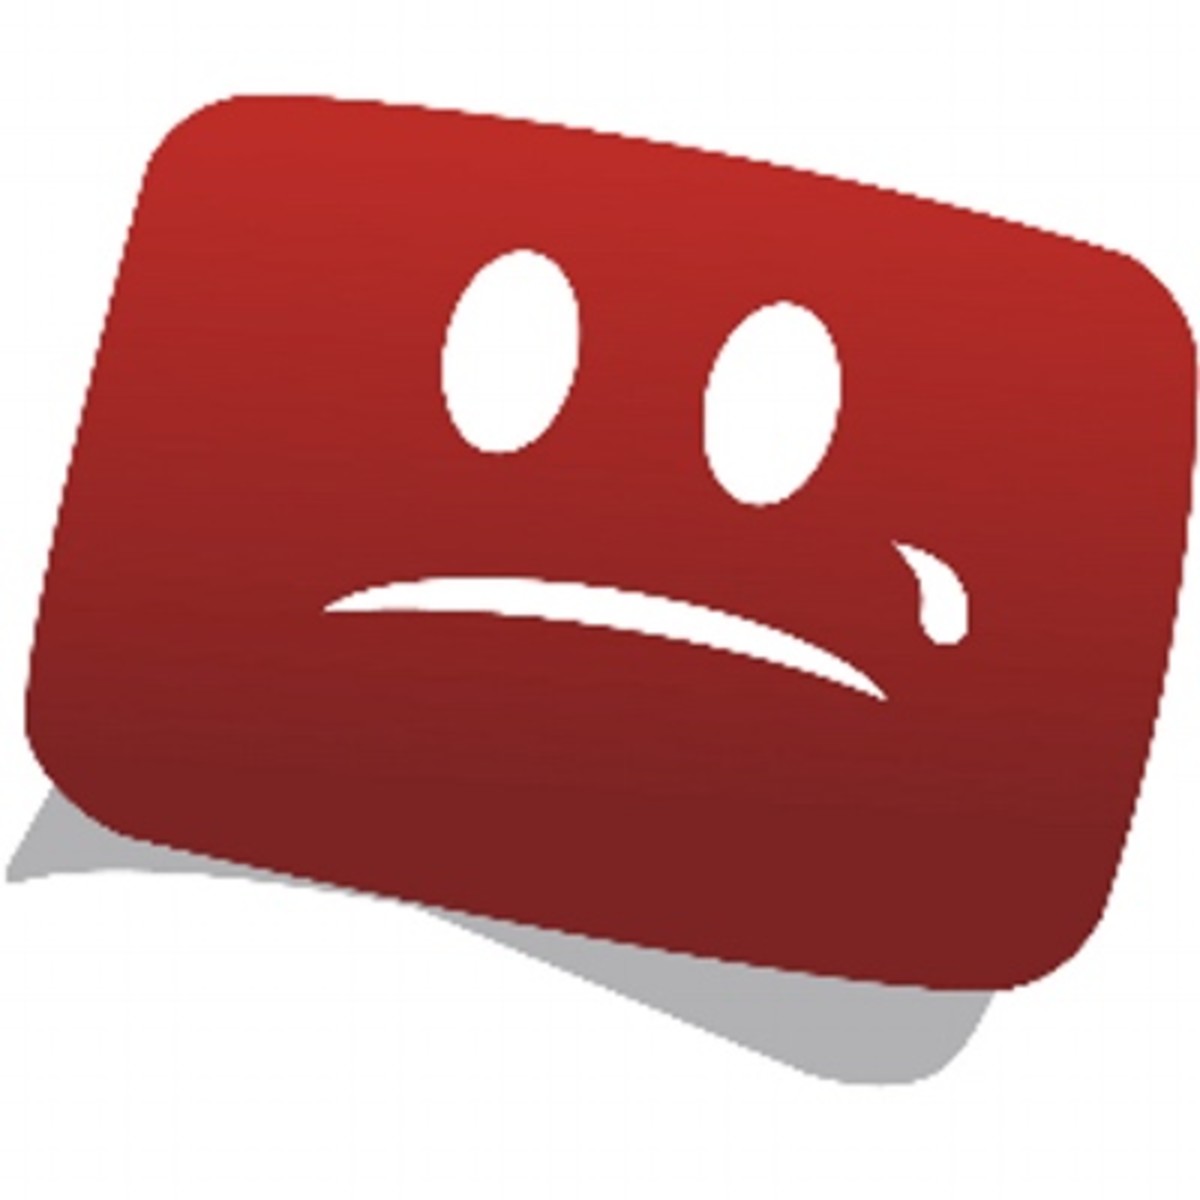 YouTube's New Monetization Policy Hurts Small Creators